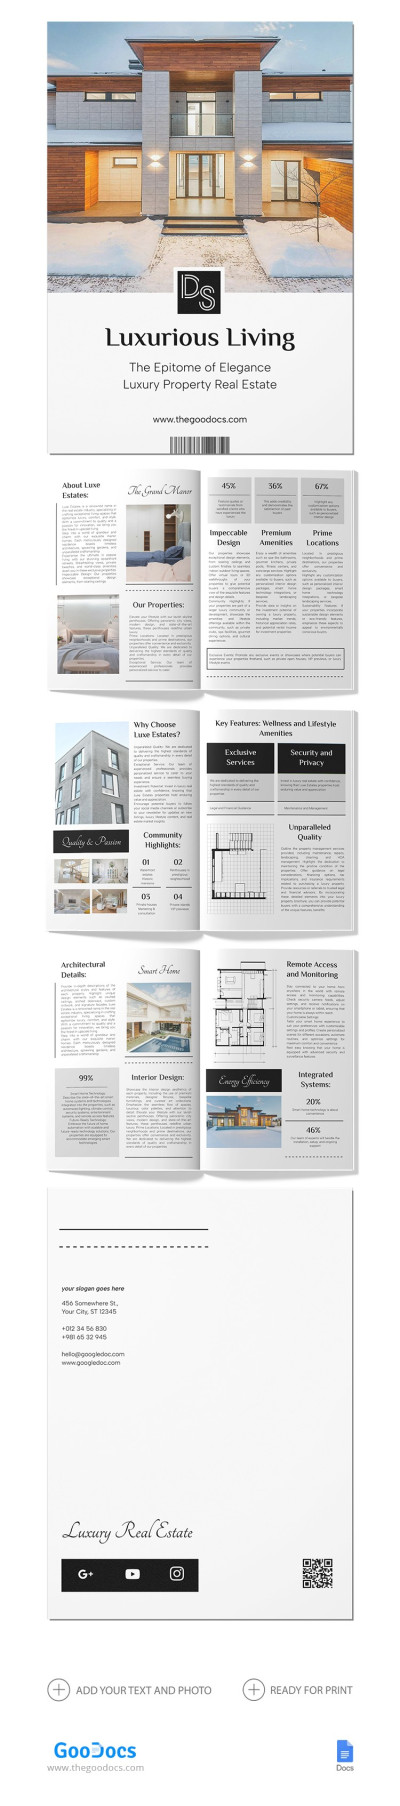 Luxury Real Estate Brochure Template